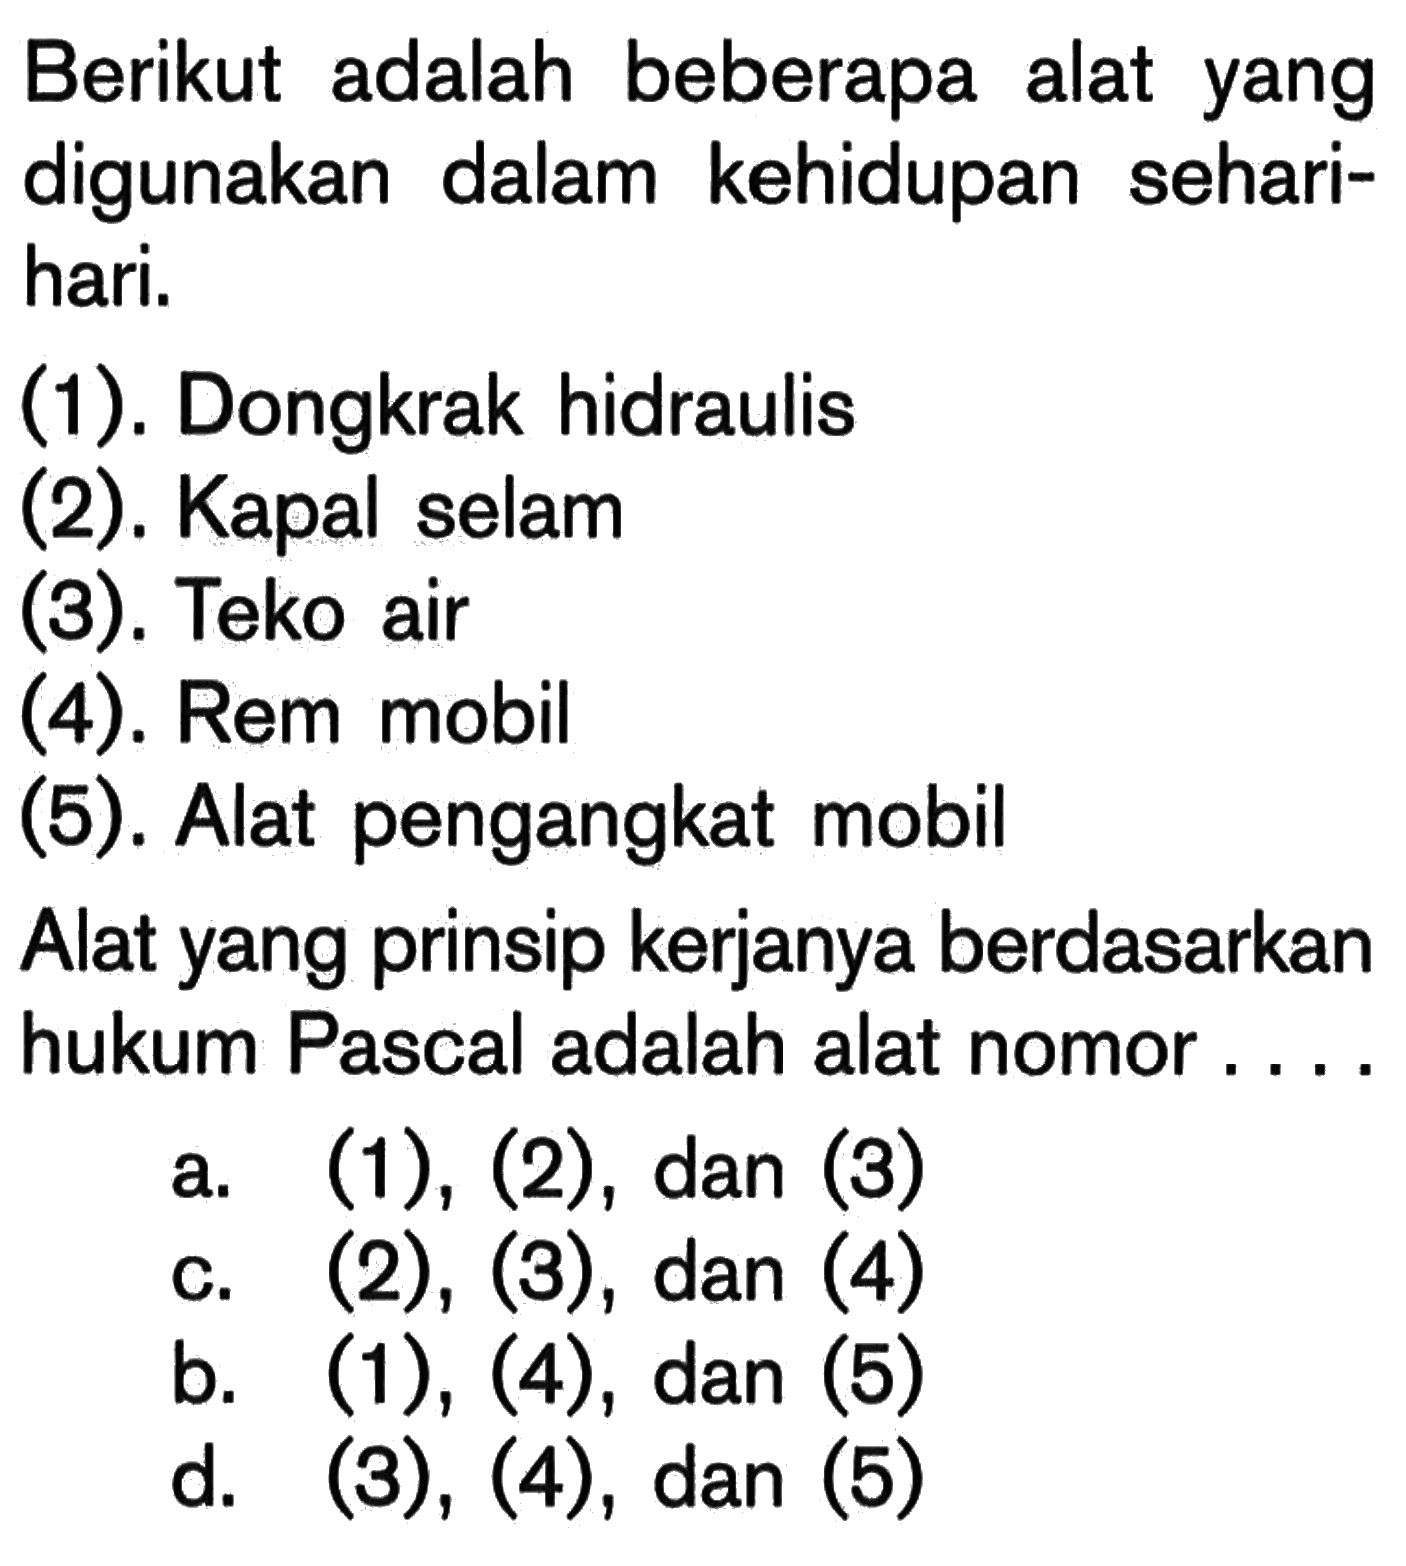 Berikut adalah beberapa alat yang digunakan dalam kehidupan sehari-hari.(1). Dongkrak hidraulis(2). Kapal selam(3). Teko air(4). Rem mobil(5). Alat pengangkat mobilAlat yang prinsip kerjanya berdasarkan hukum Pascal adalah alat nomor....a. (1), (2), dan (3)c. (2),(3), dan (4)b. (1),(4), dan (5)d. (3),(4), dan (5)